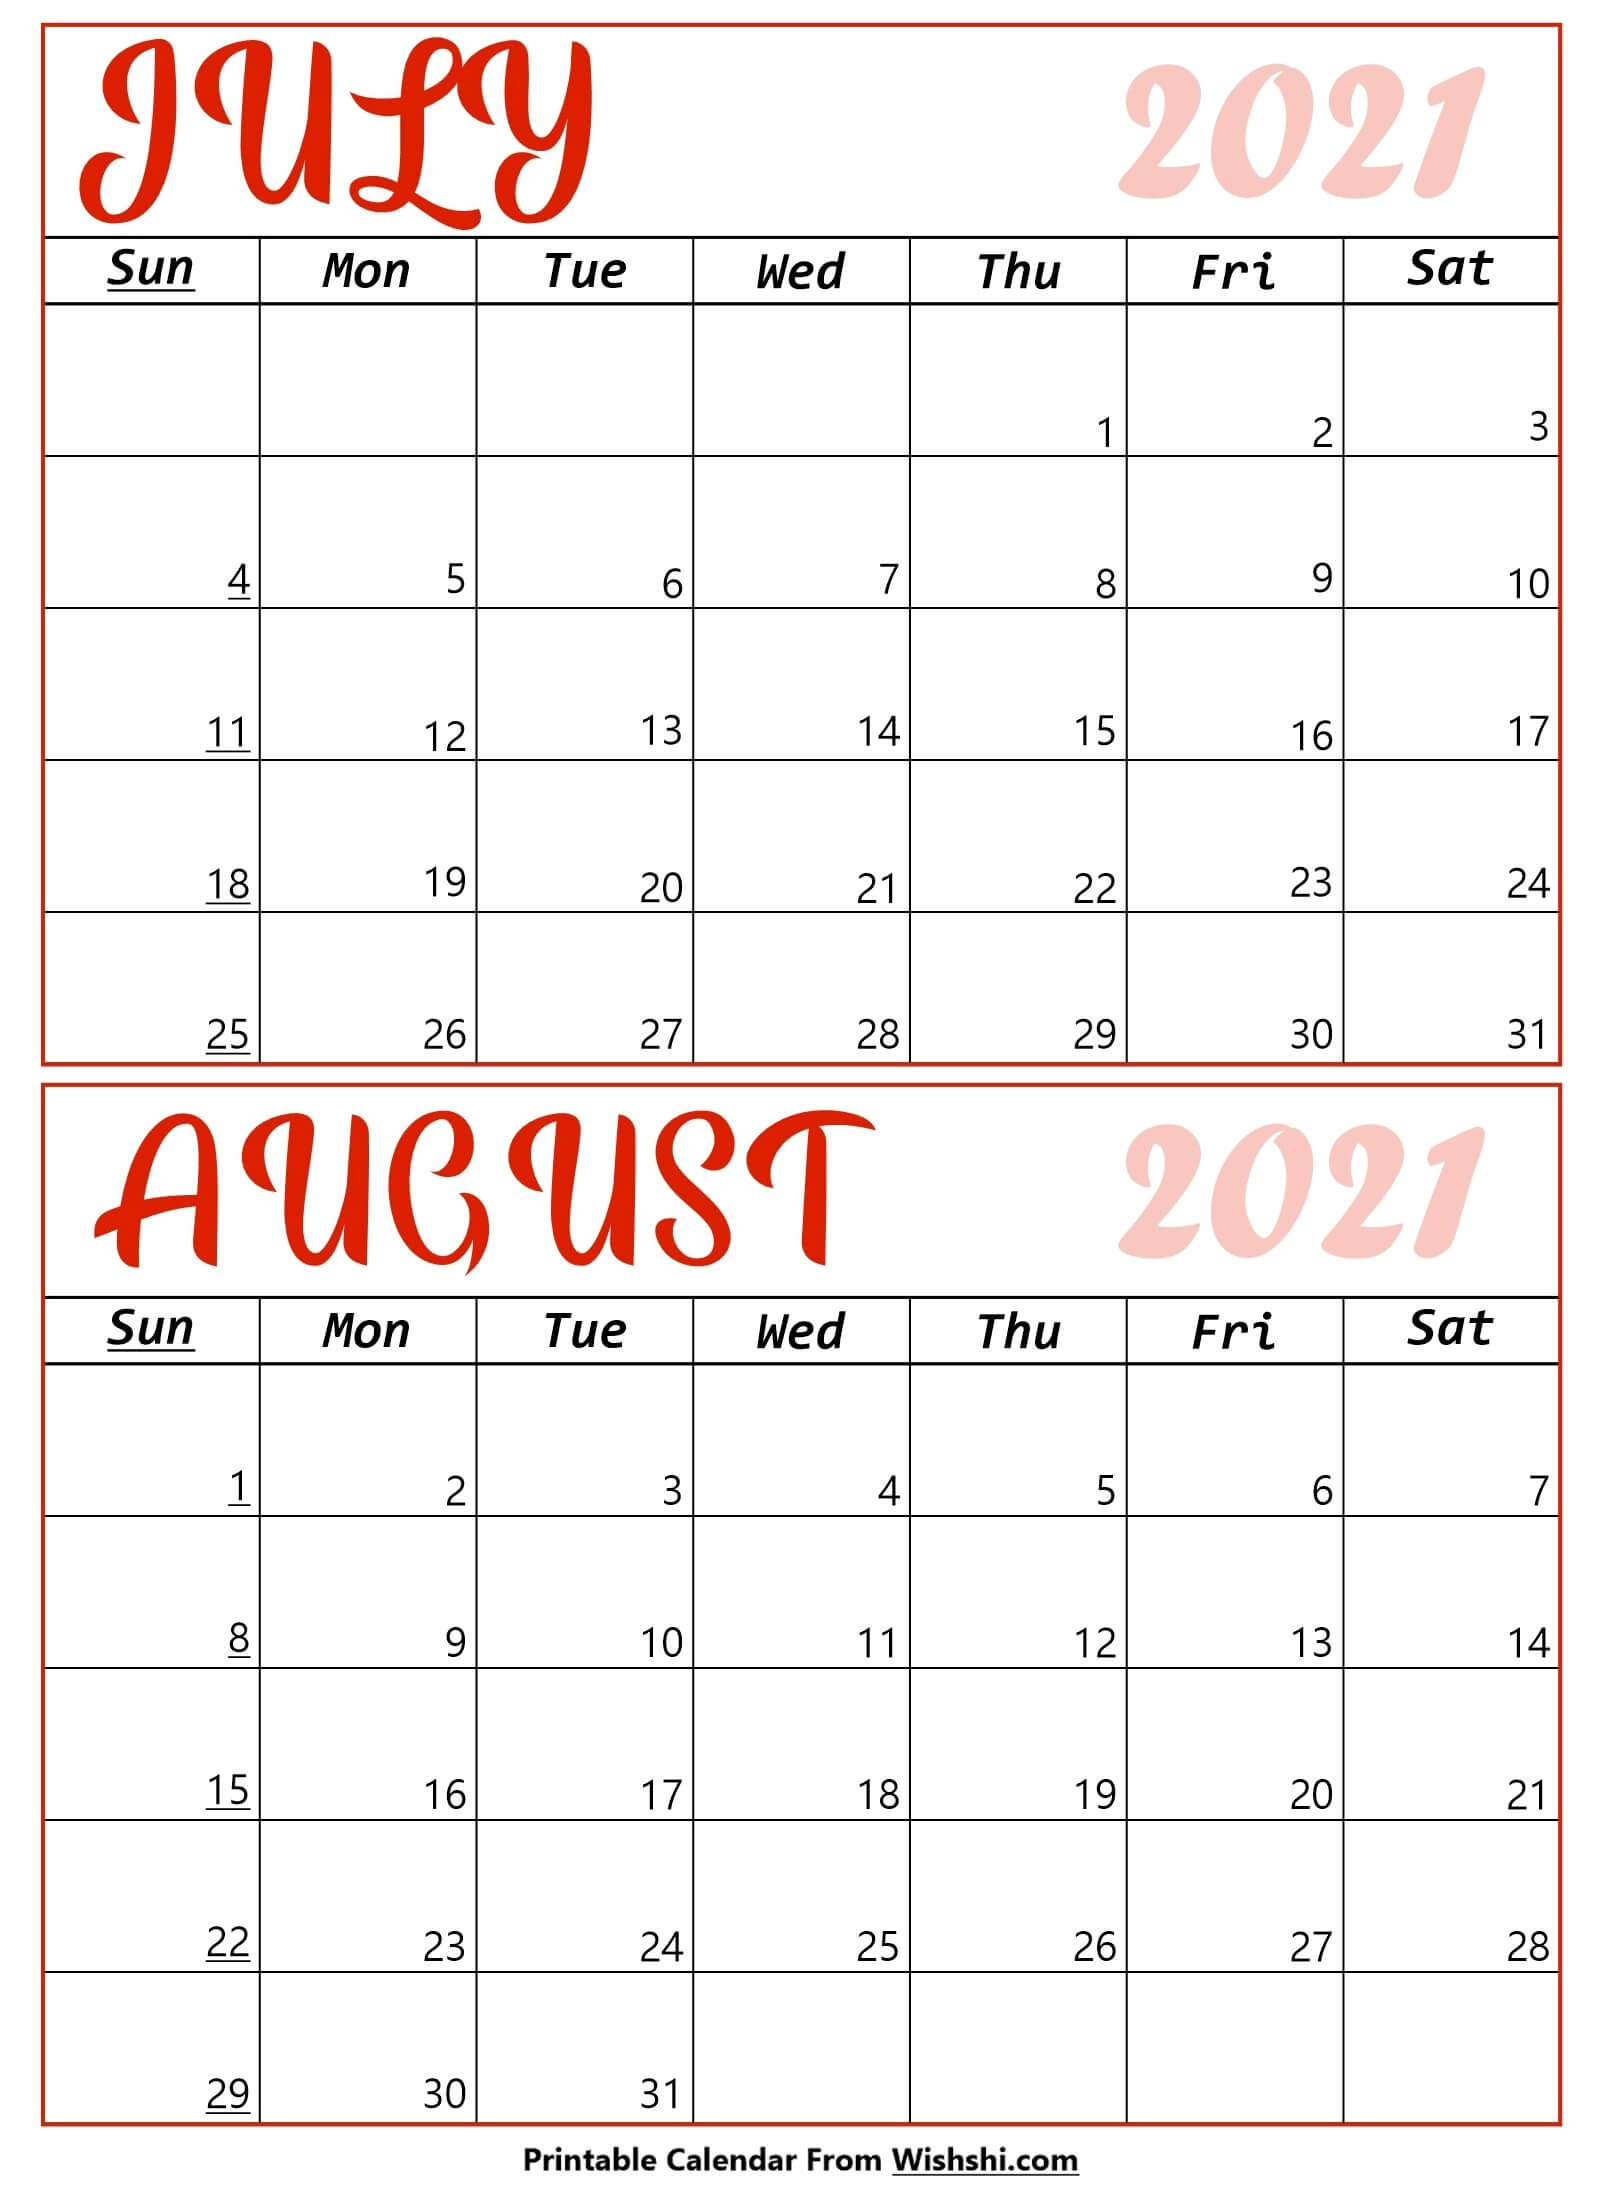 Printable July August 2021 Calendar - Free Printable-July 2021 Calendar For Bills